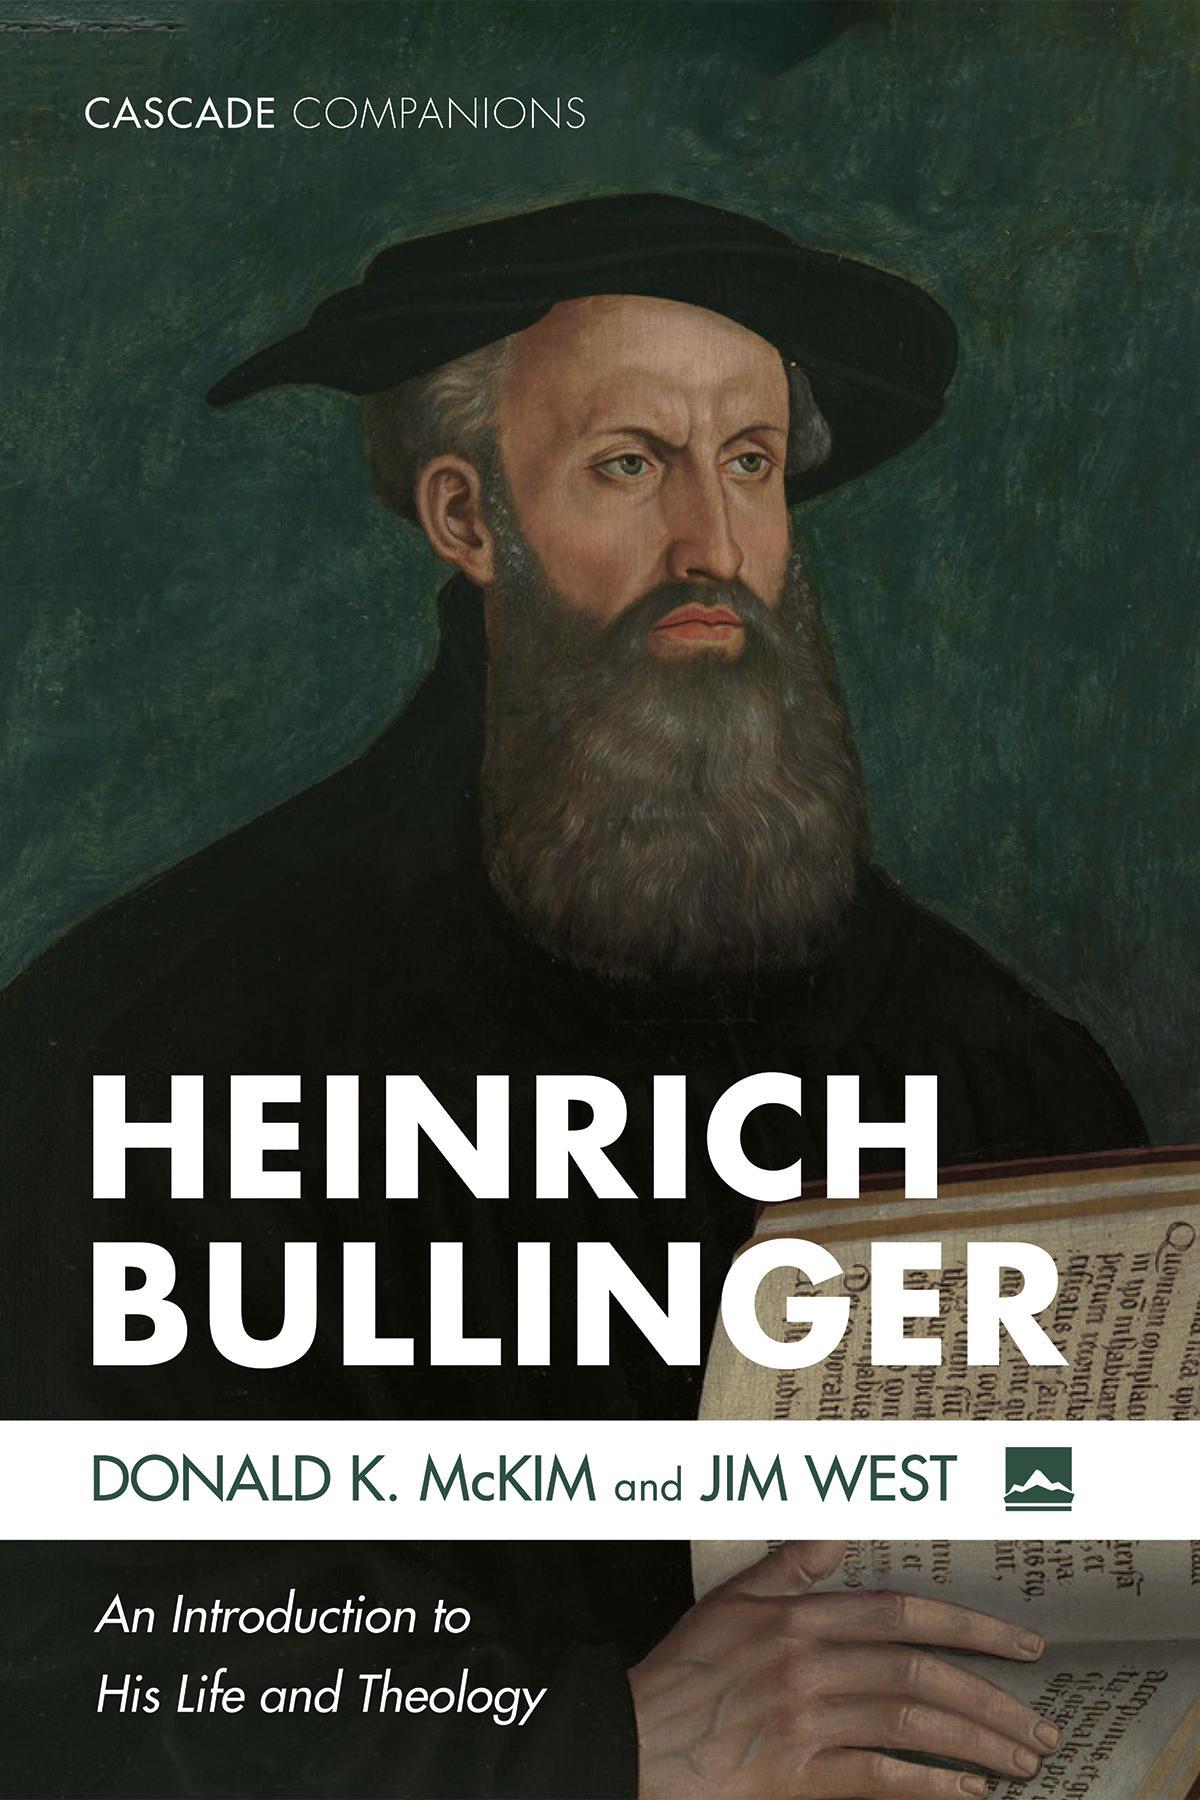 Heinrich　Cascade　Bullinger　Companions　eBook　K.　v.　Donald　Mckim　u.　weitere　Weltbild